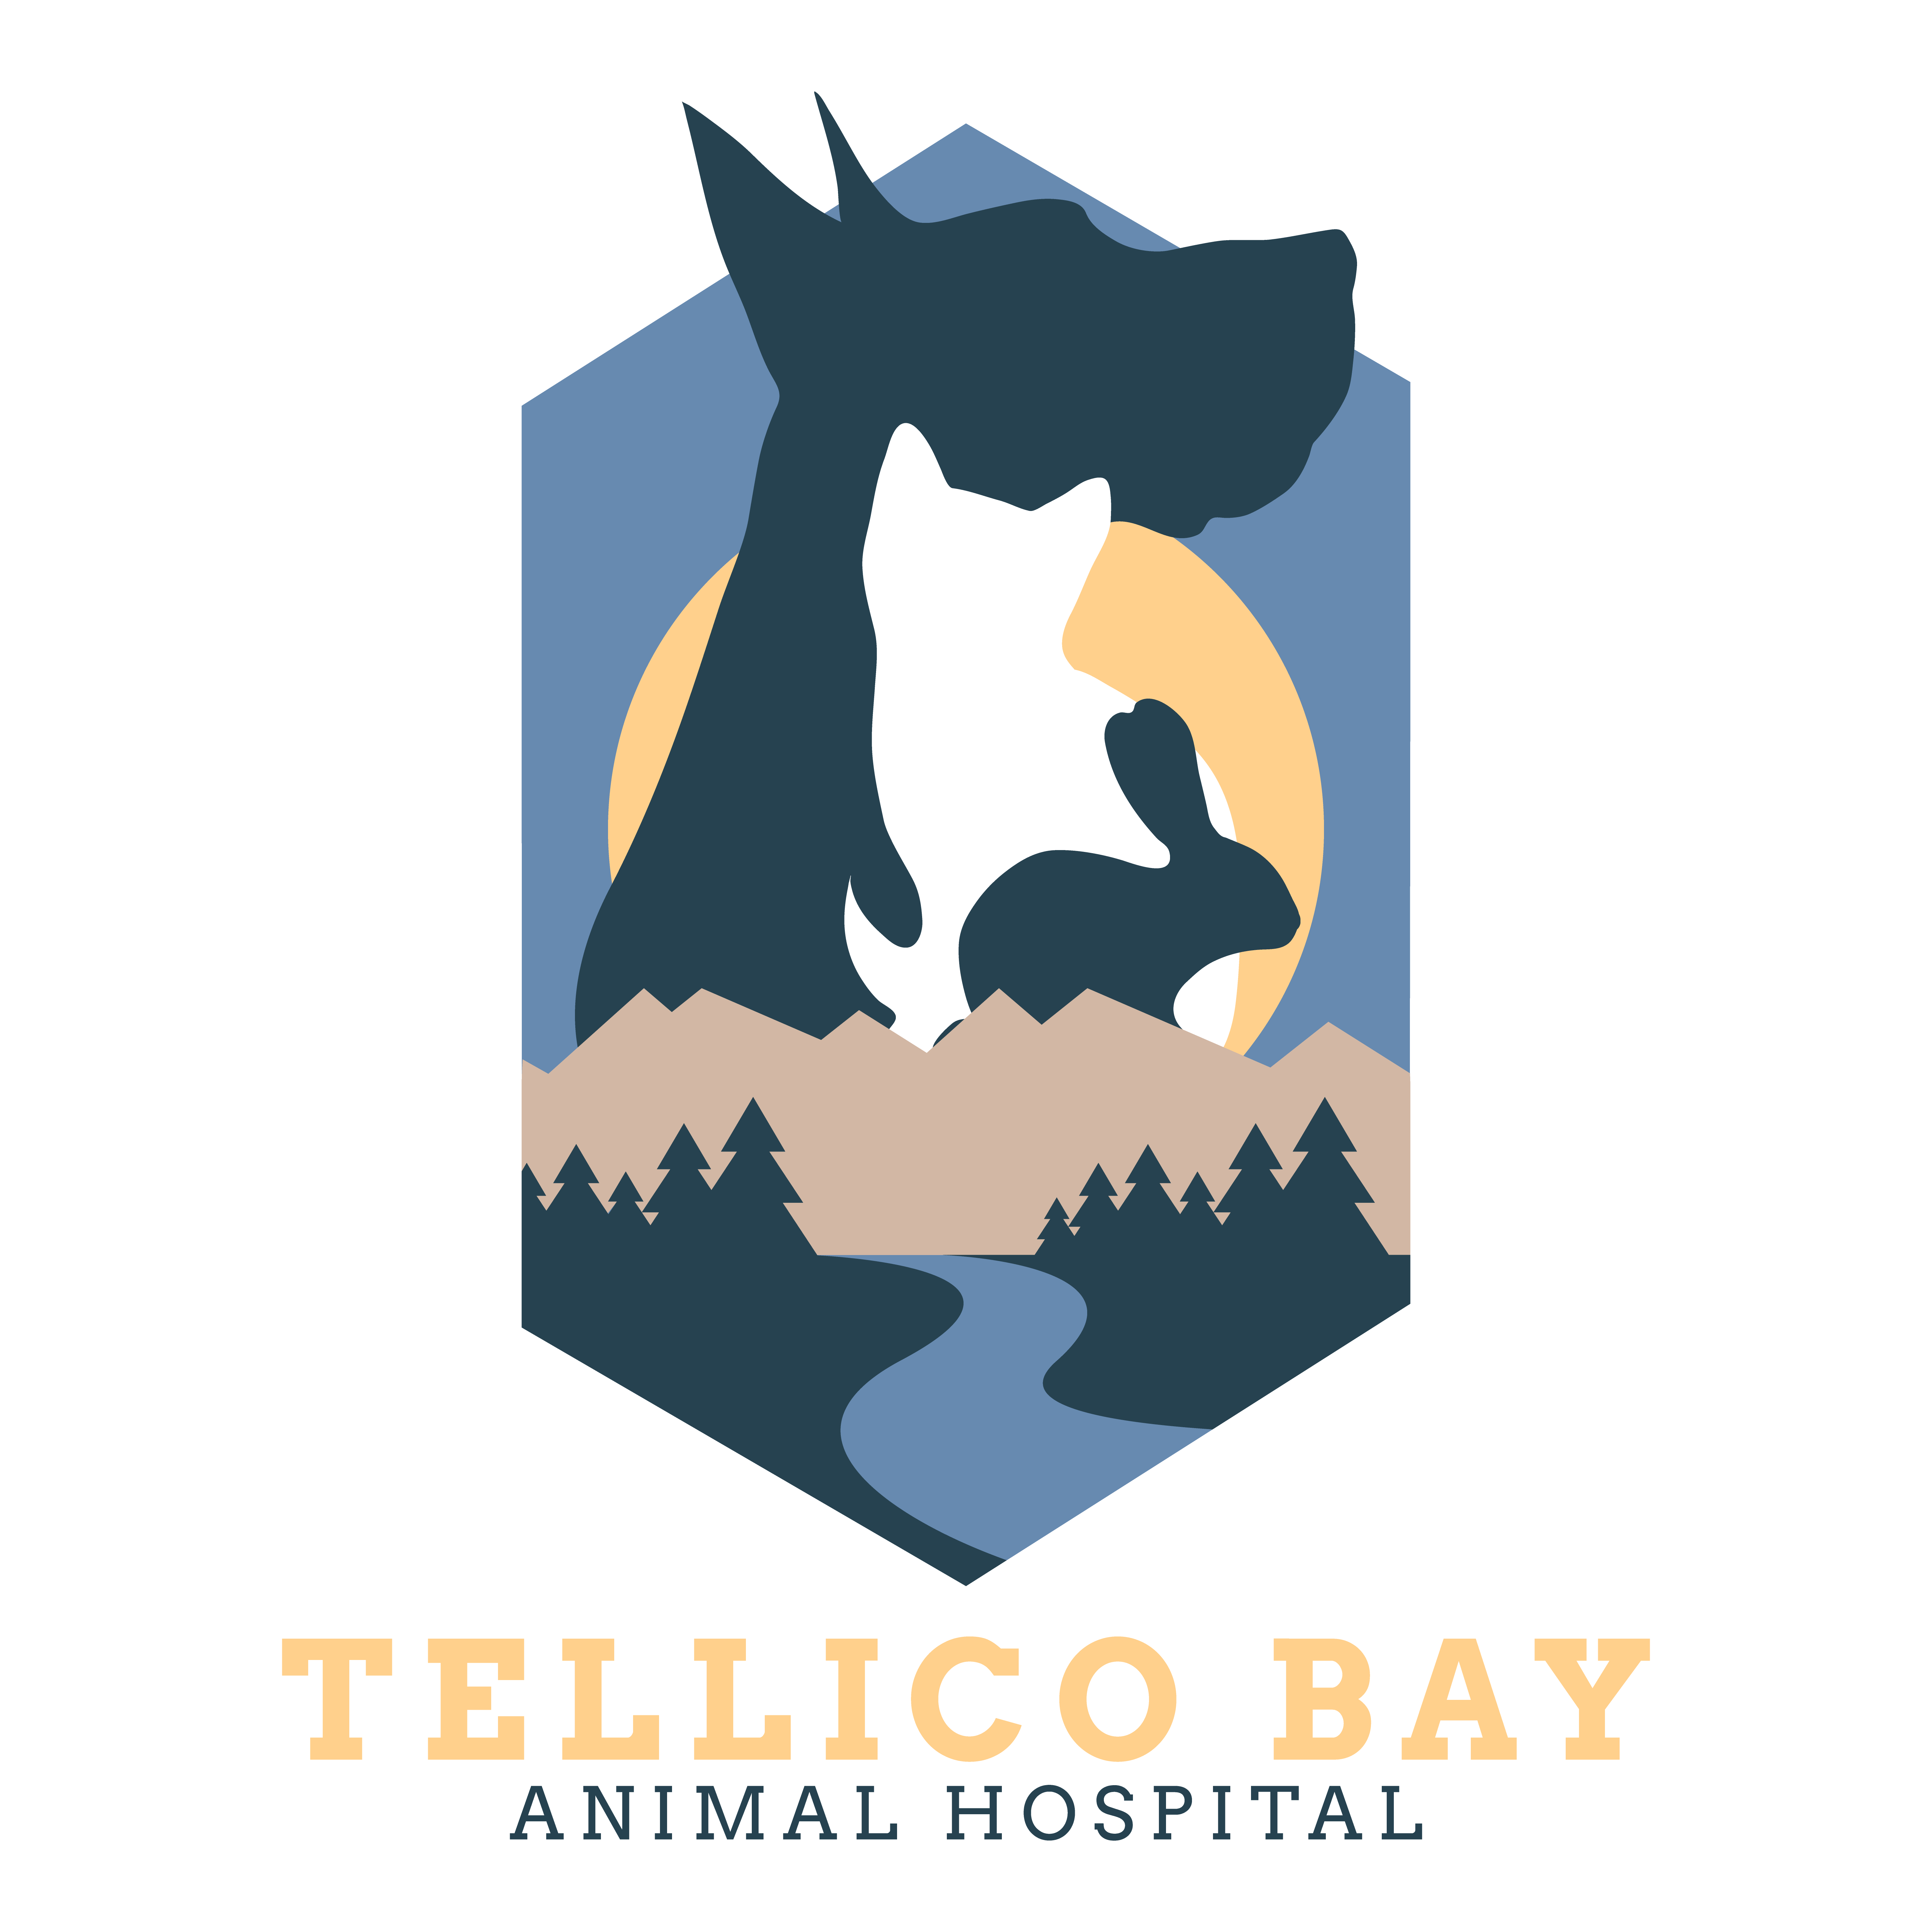 Tellico Bay Animal Hospital